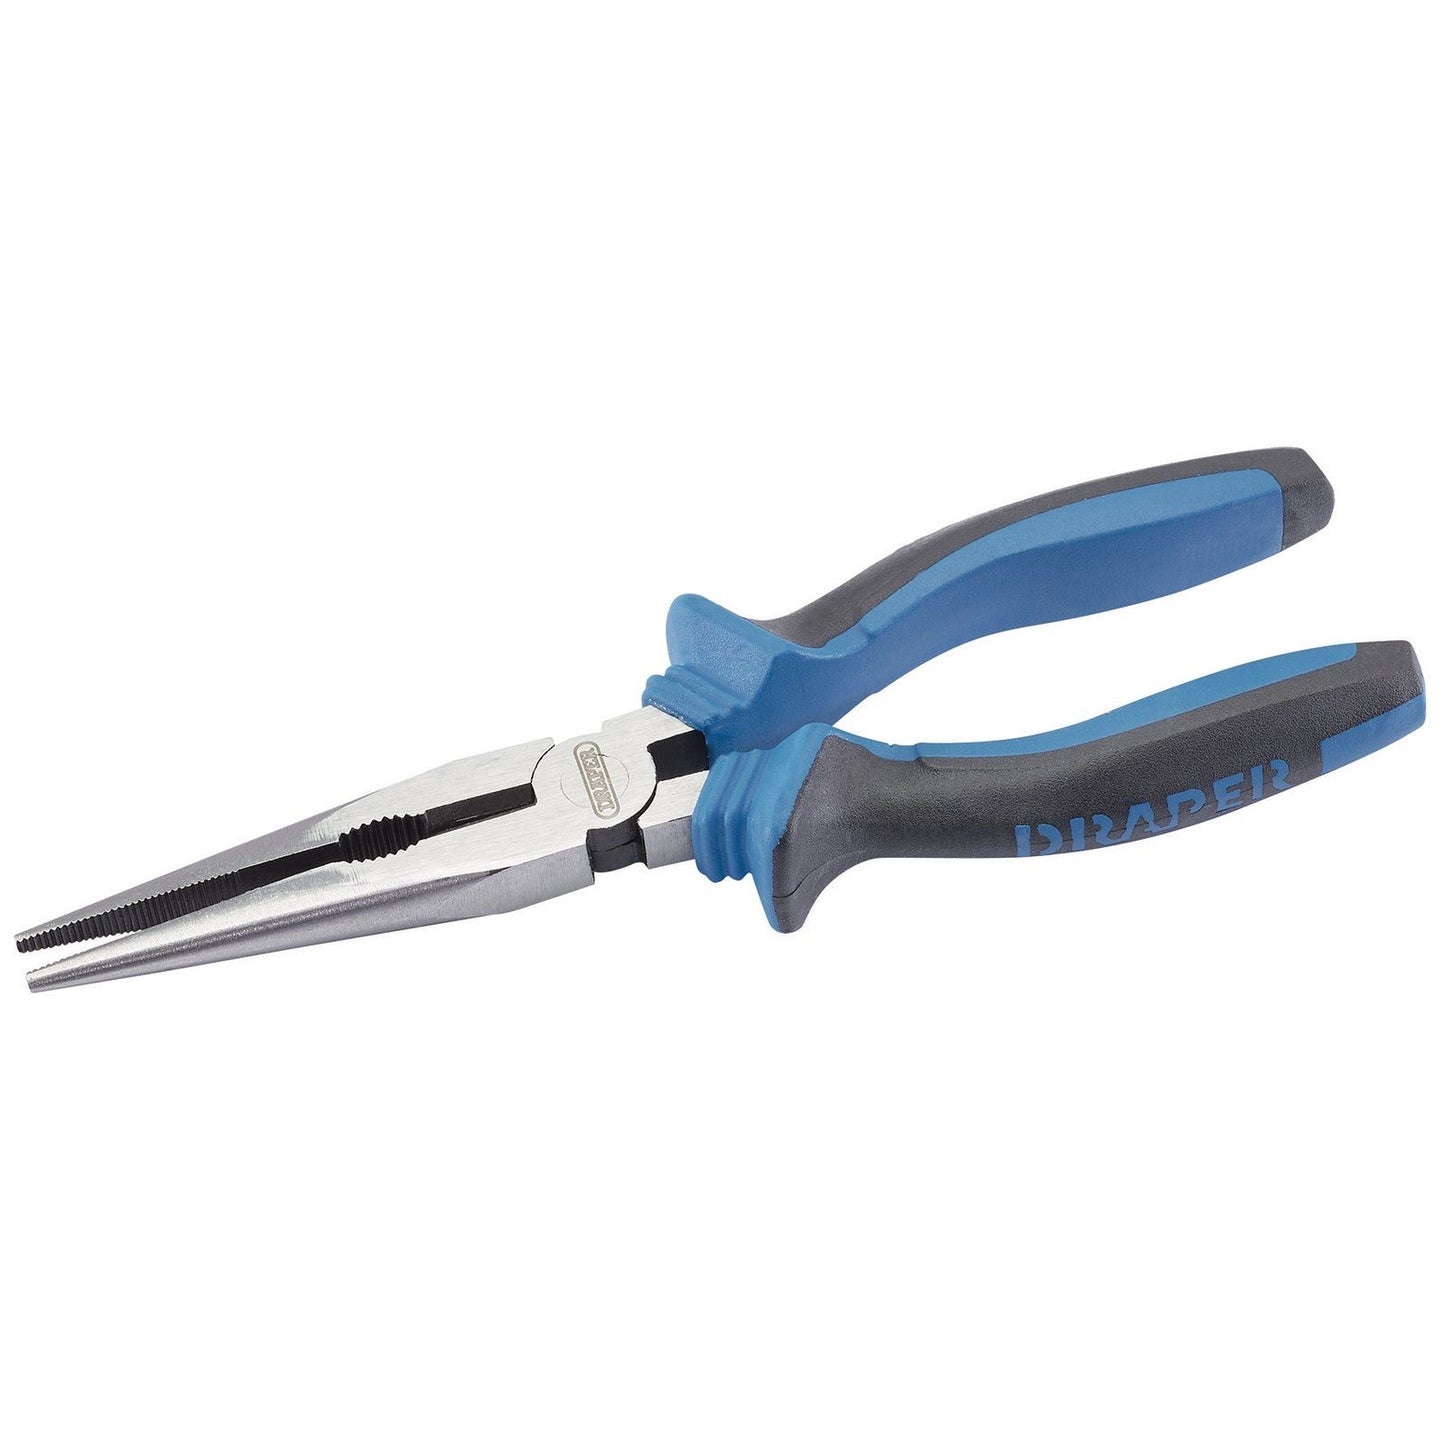 Draper 1x 200mm Soft Grip Long Nose Pliers Garage Professional Standard Tool - 44143